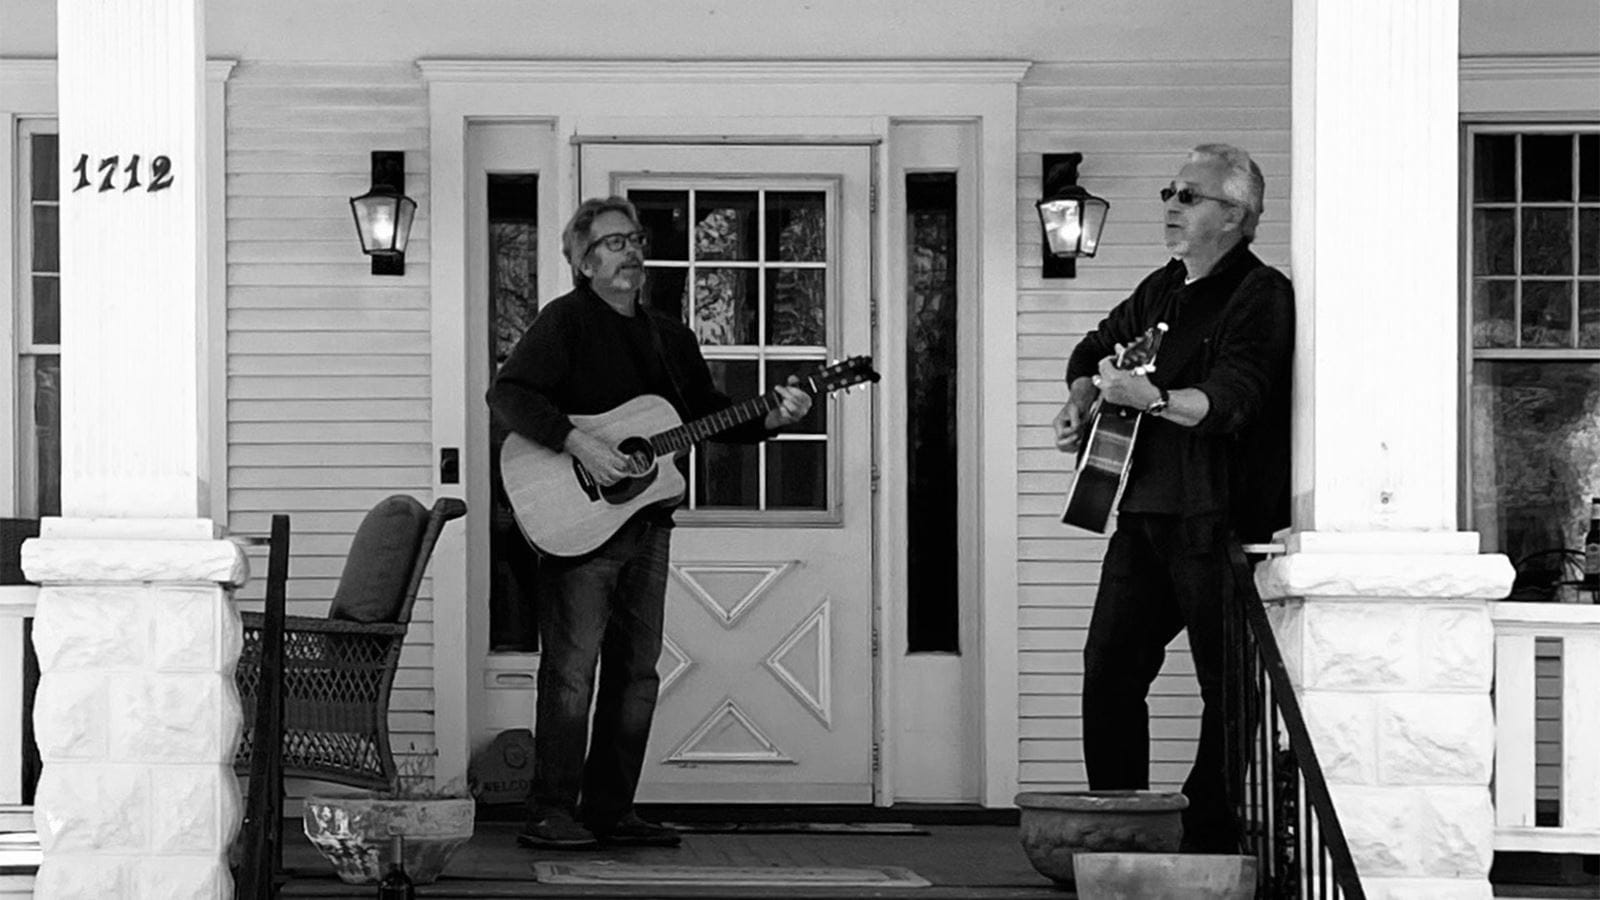 Matt Lightcap and John Horowy playing music for their neighbors in Rockford, Ill.